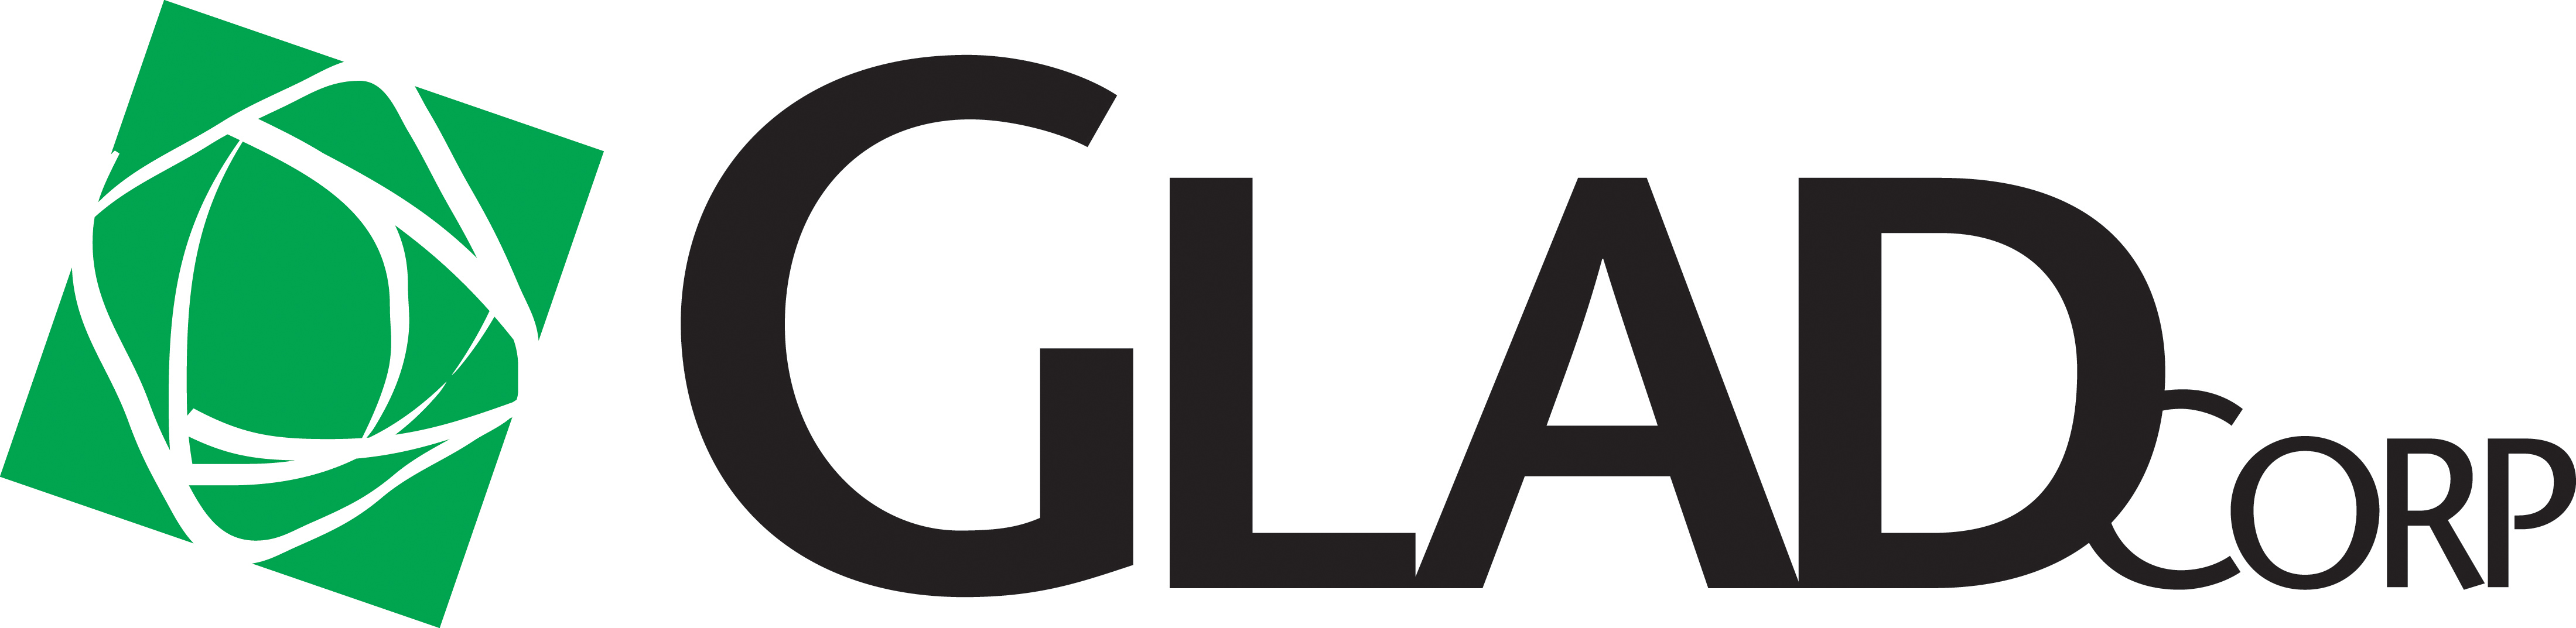 GladCorp Logo